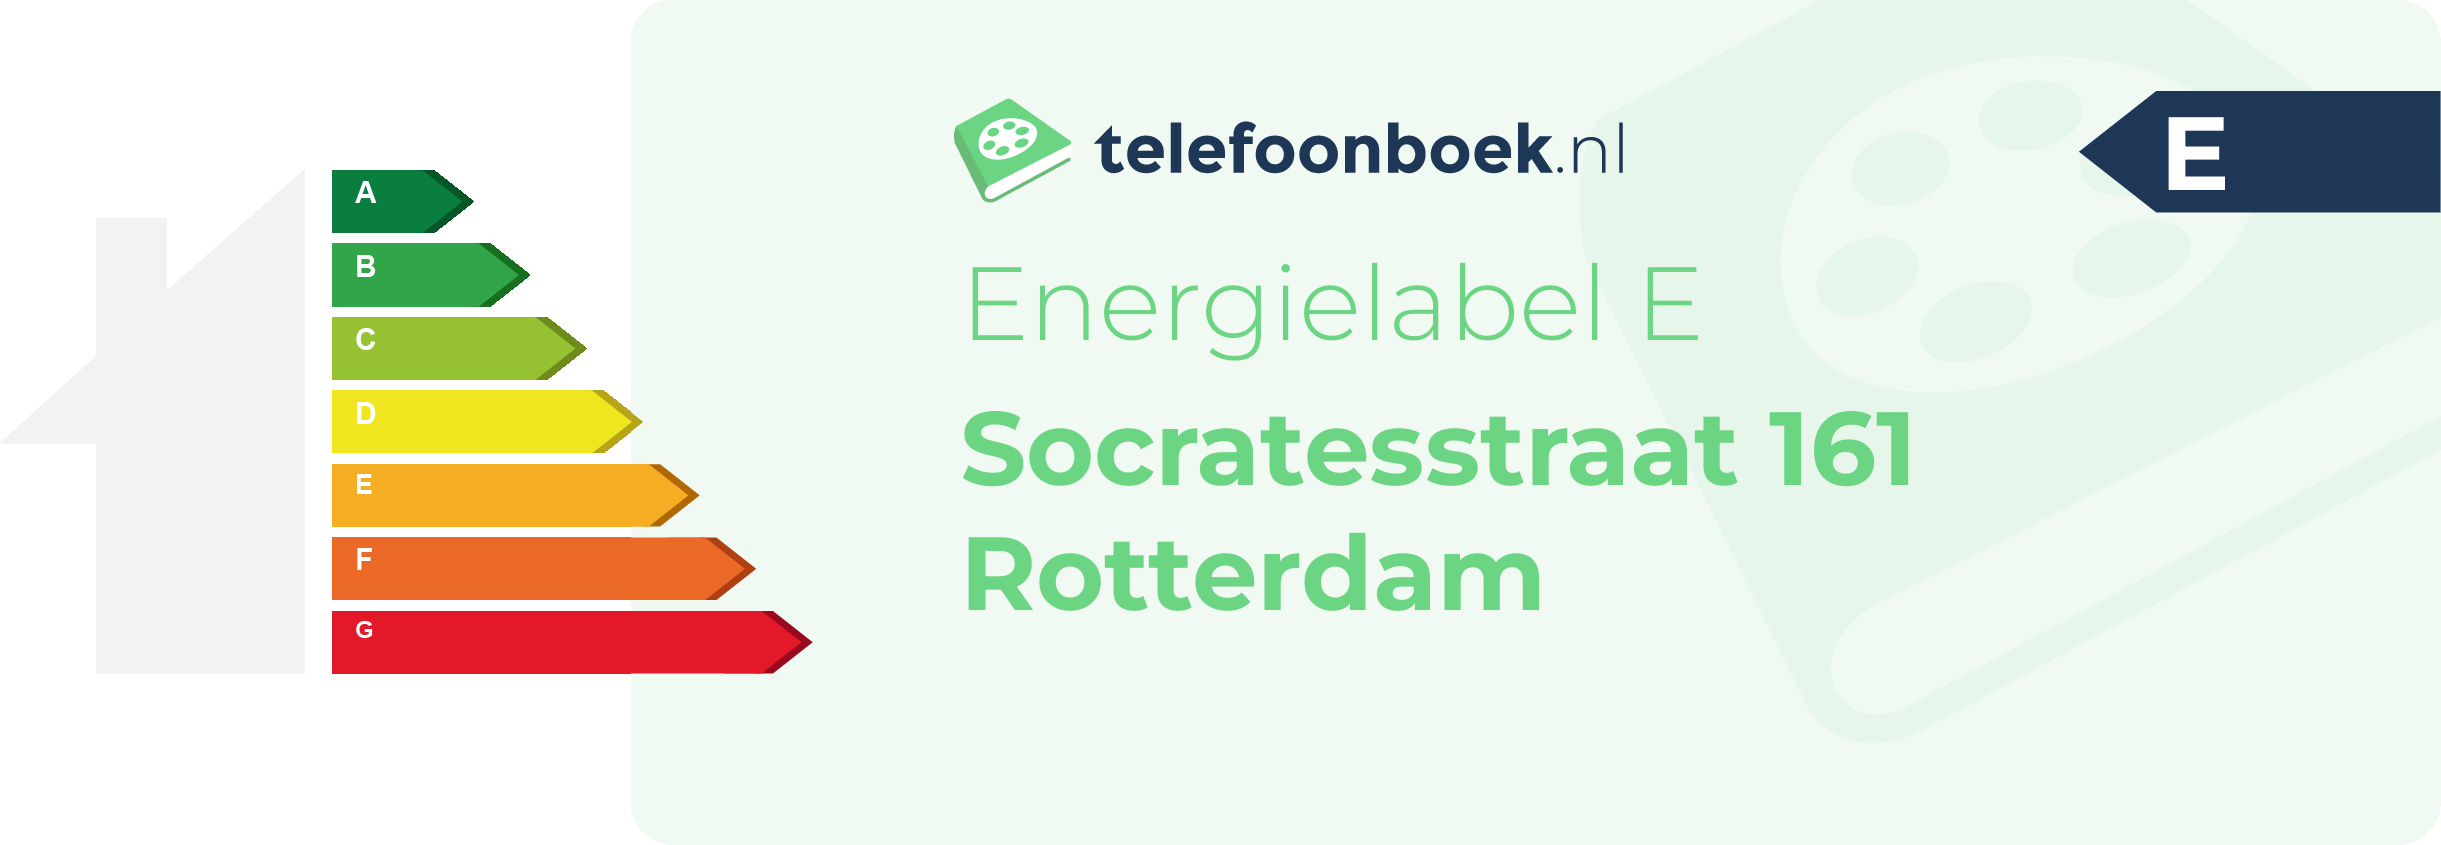 Energielabel Socratesstraat 161 Rotterdam